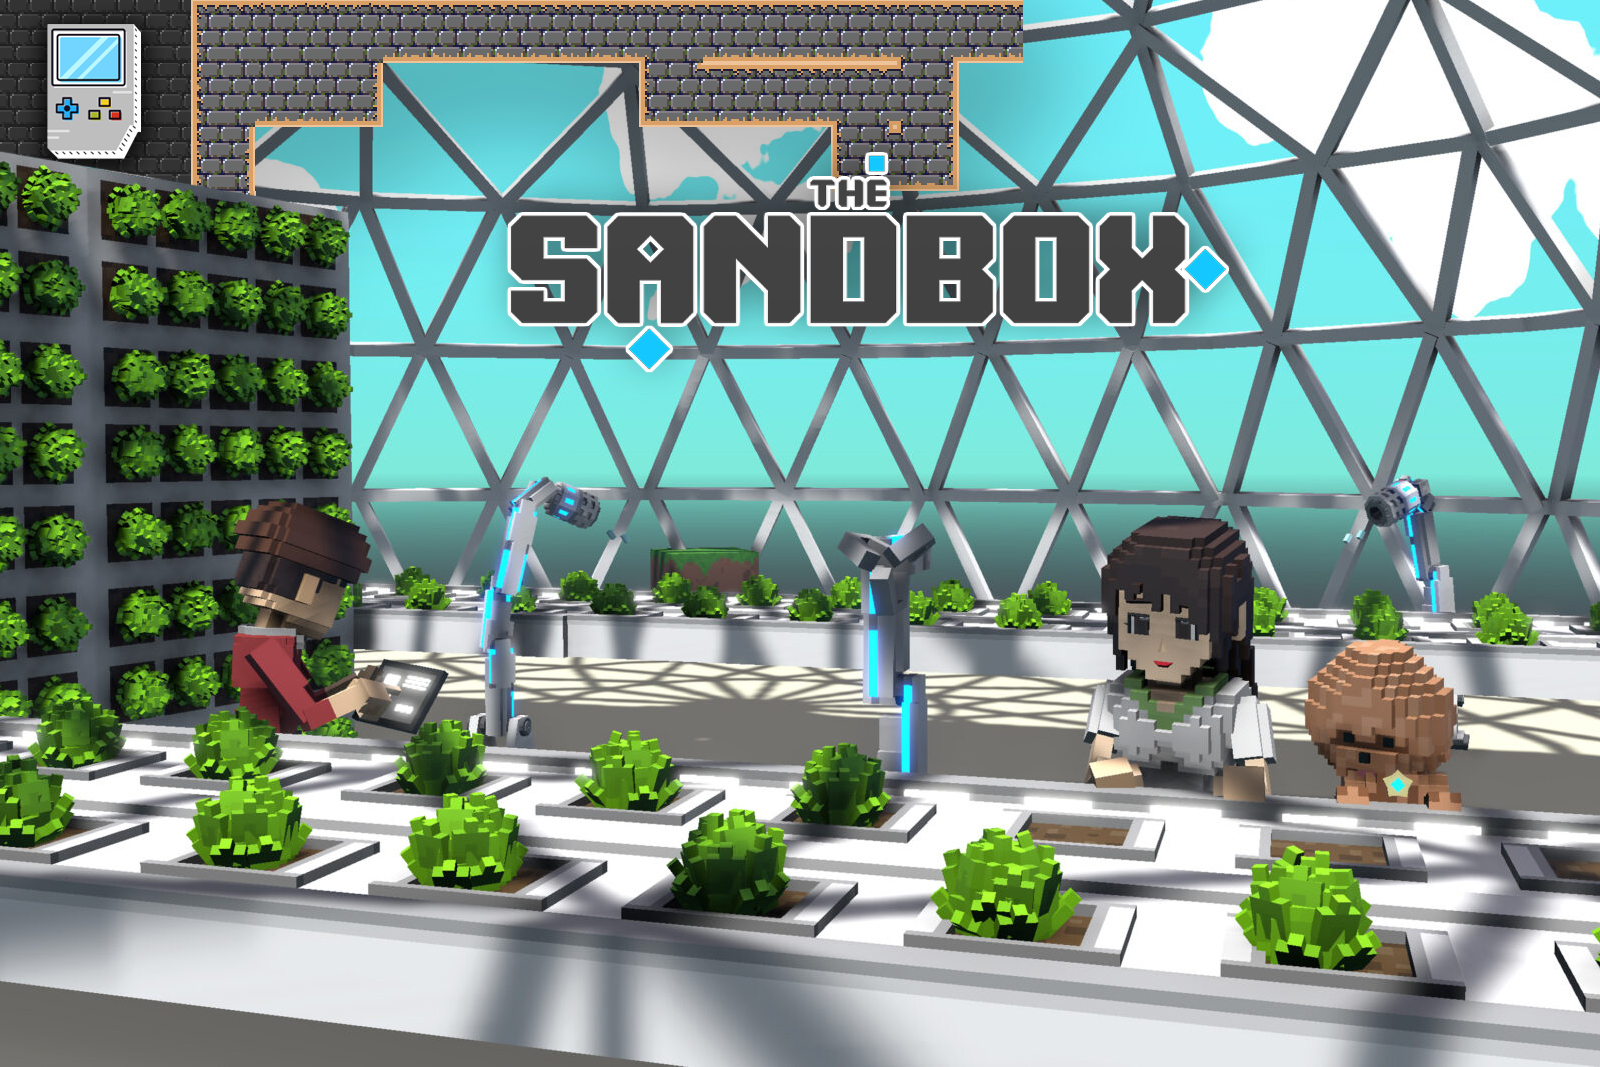 Regal Hotel Gameplay in The Sandbox.